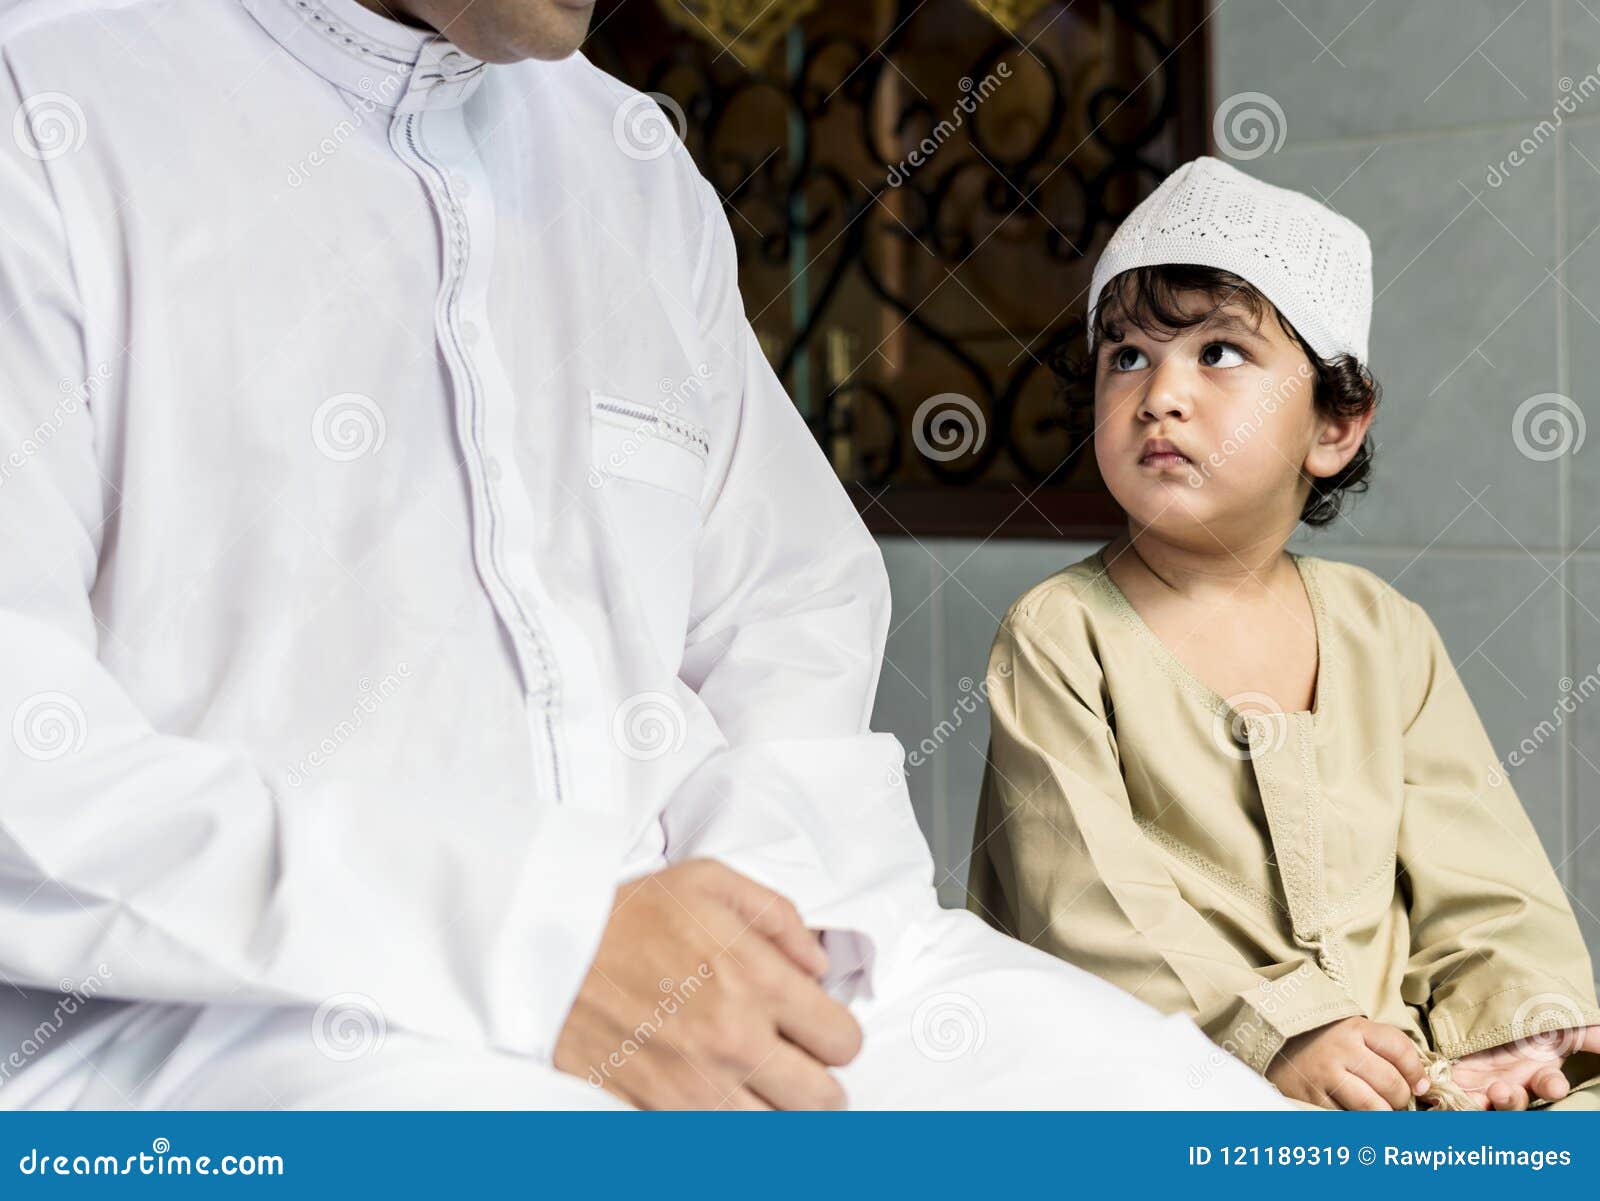 muslim boy learning how to salah